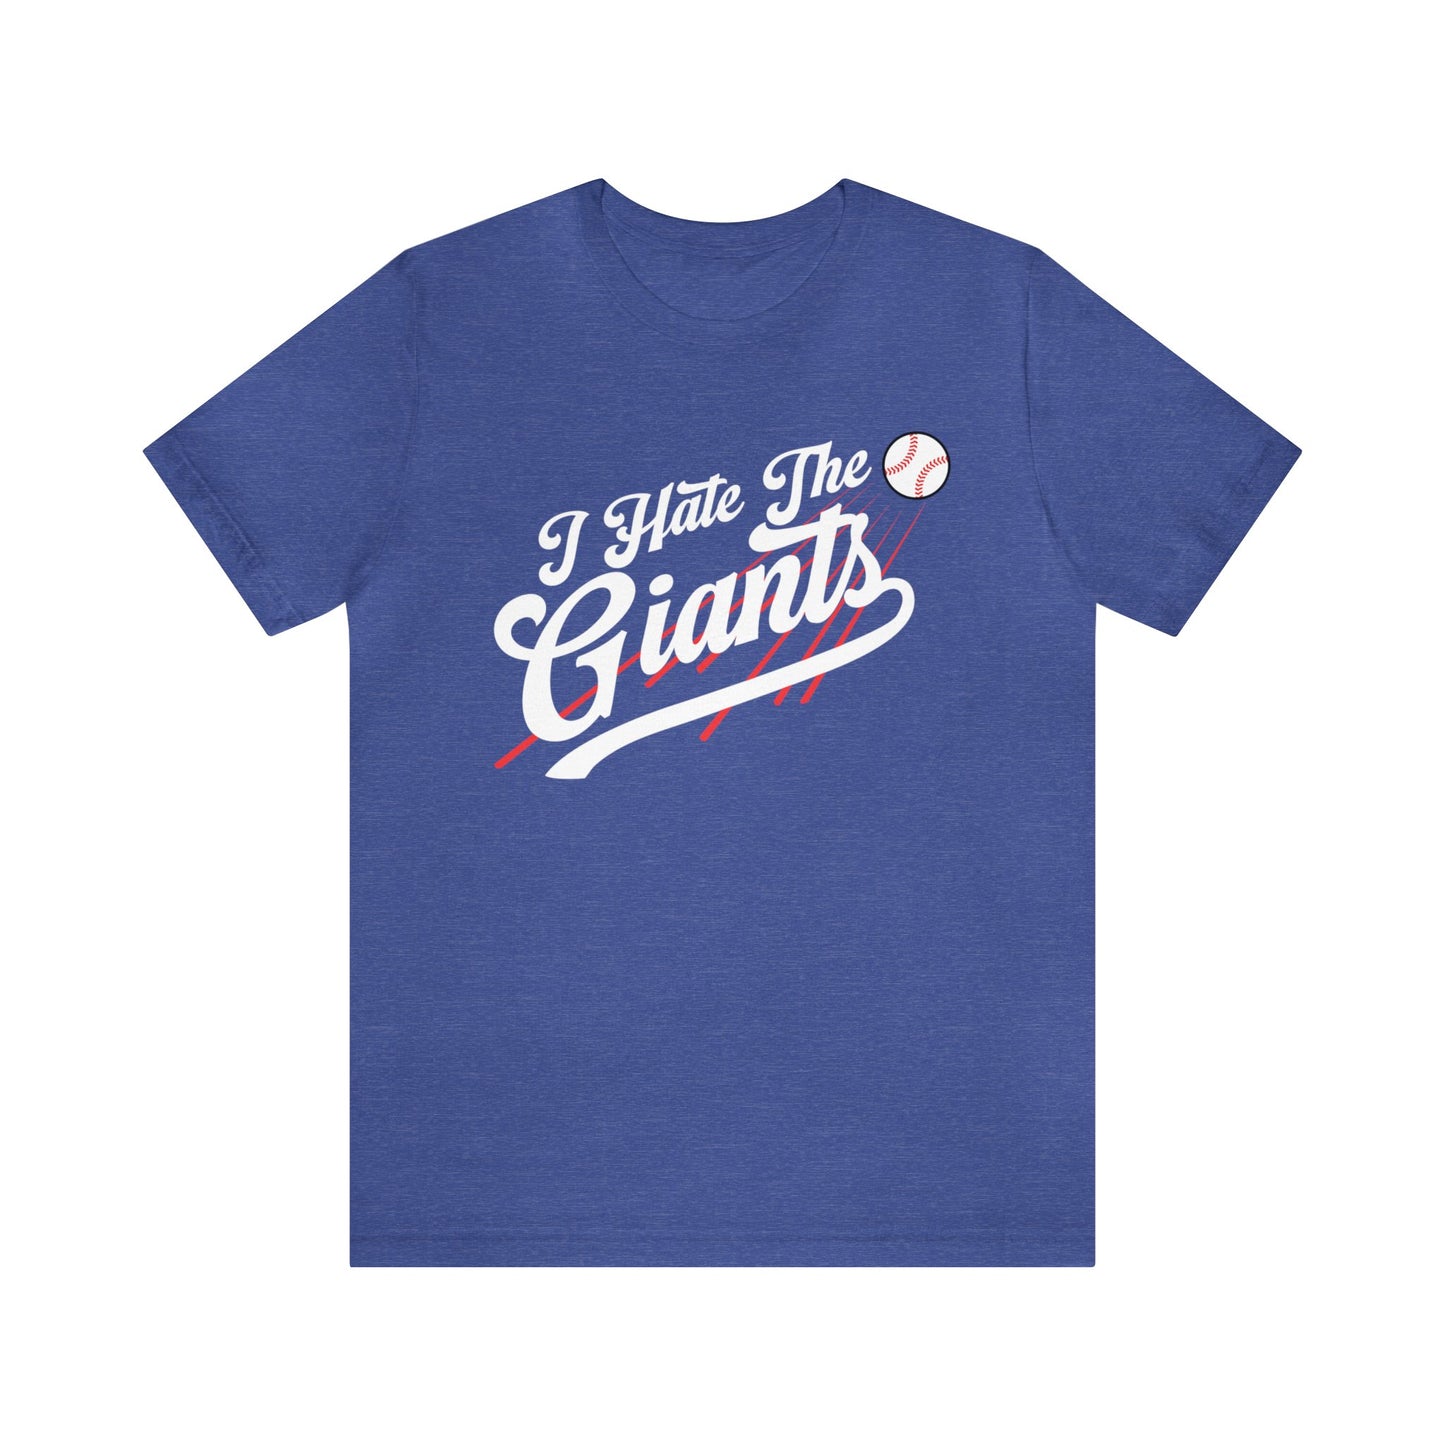 I Hate That San Fran Team (LA Dodgers fans) - Unisex Jersey Short Sleeve Tee